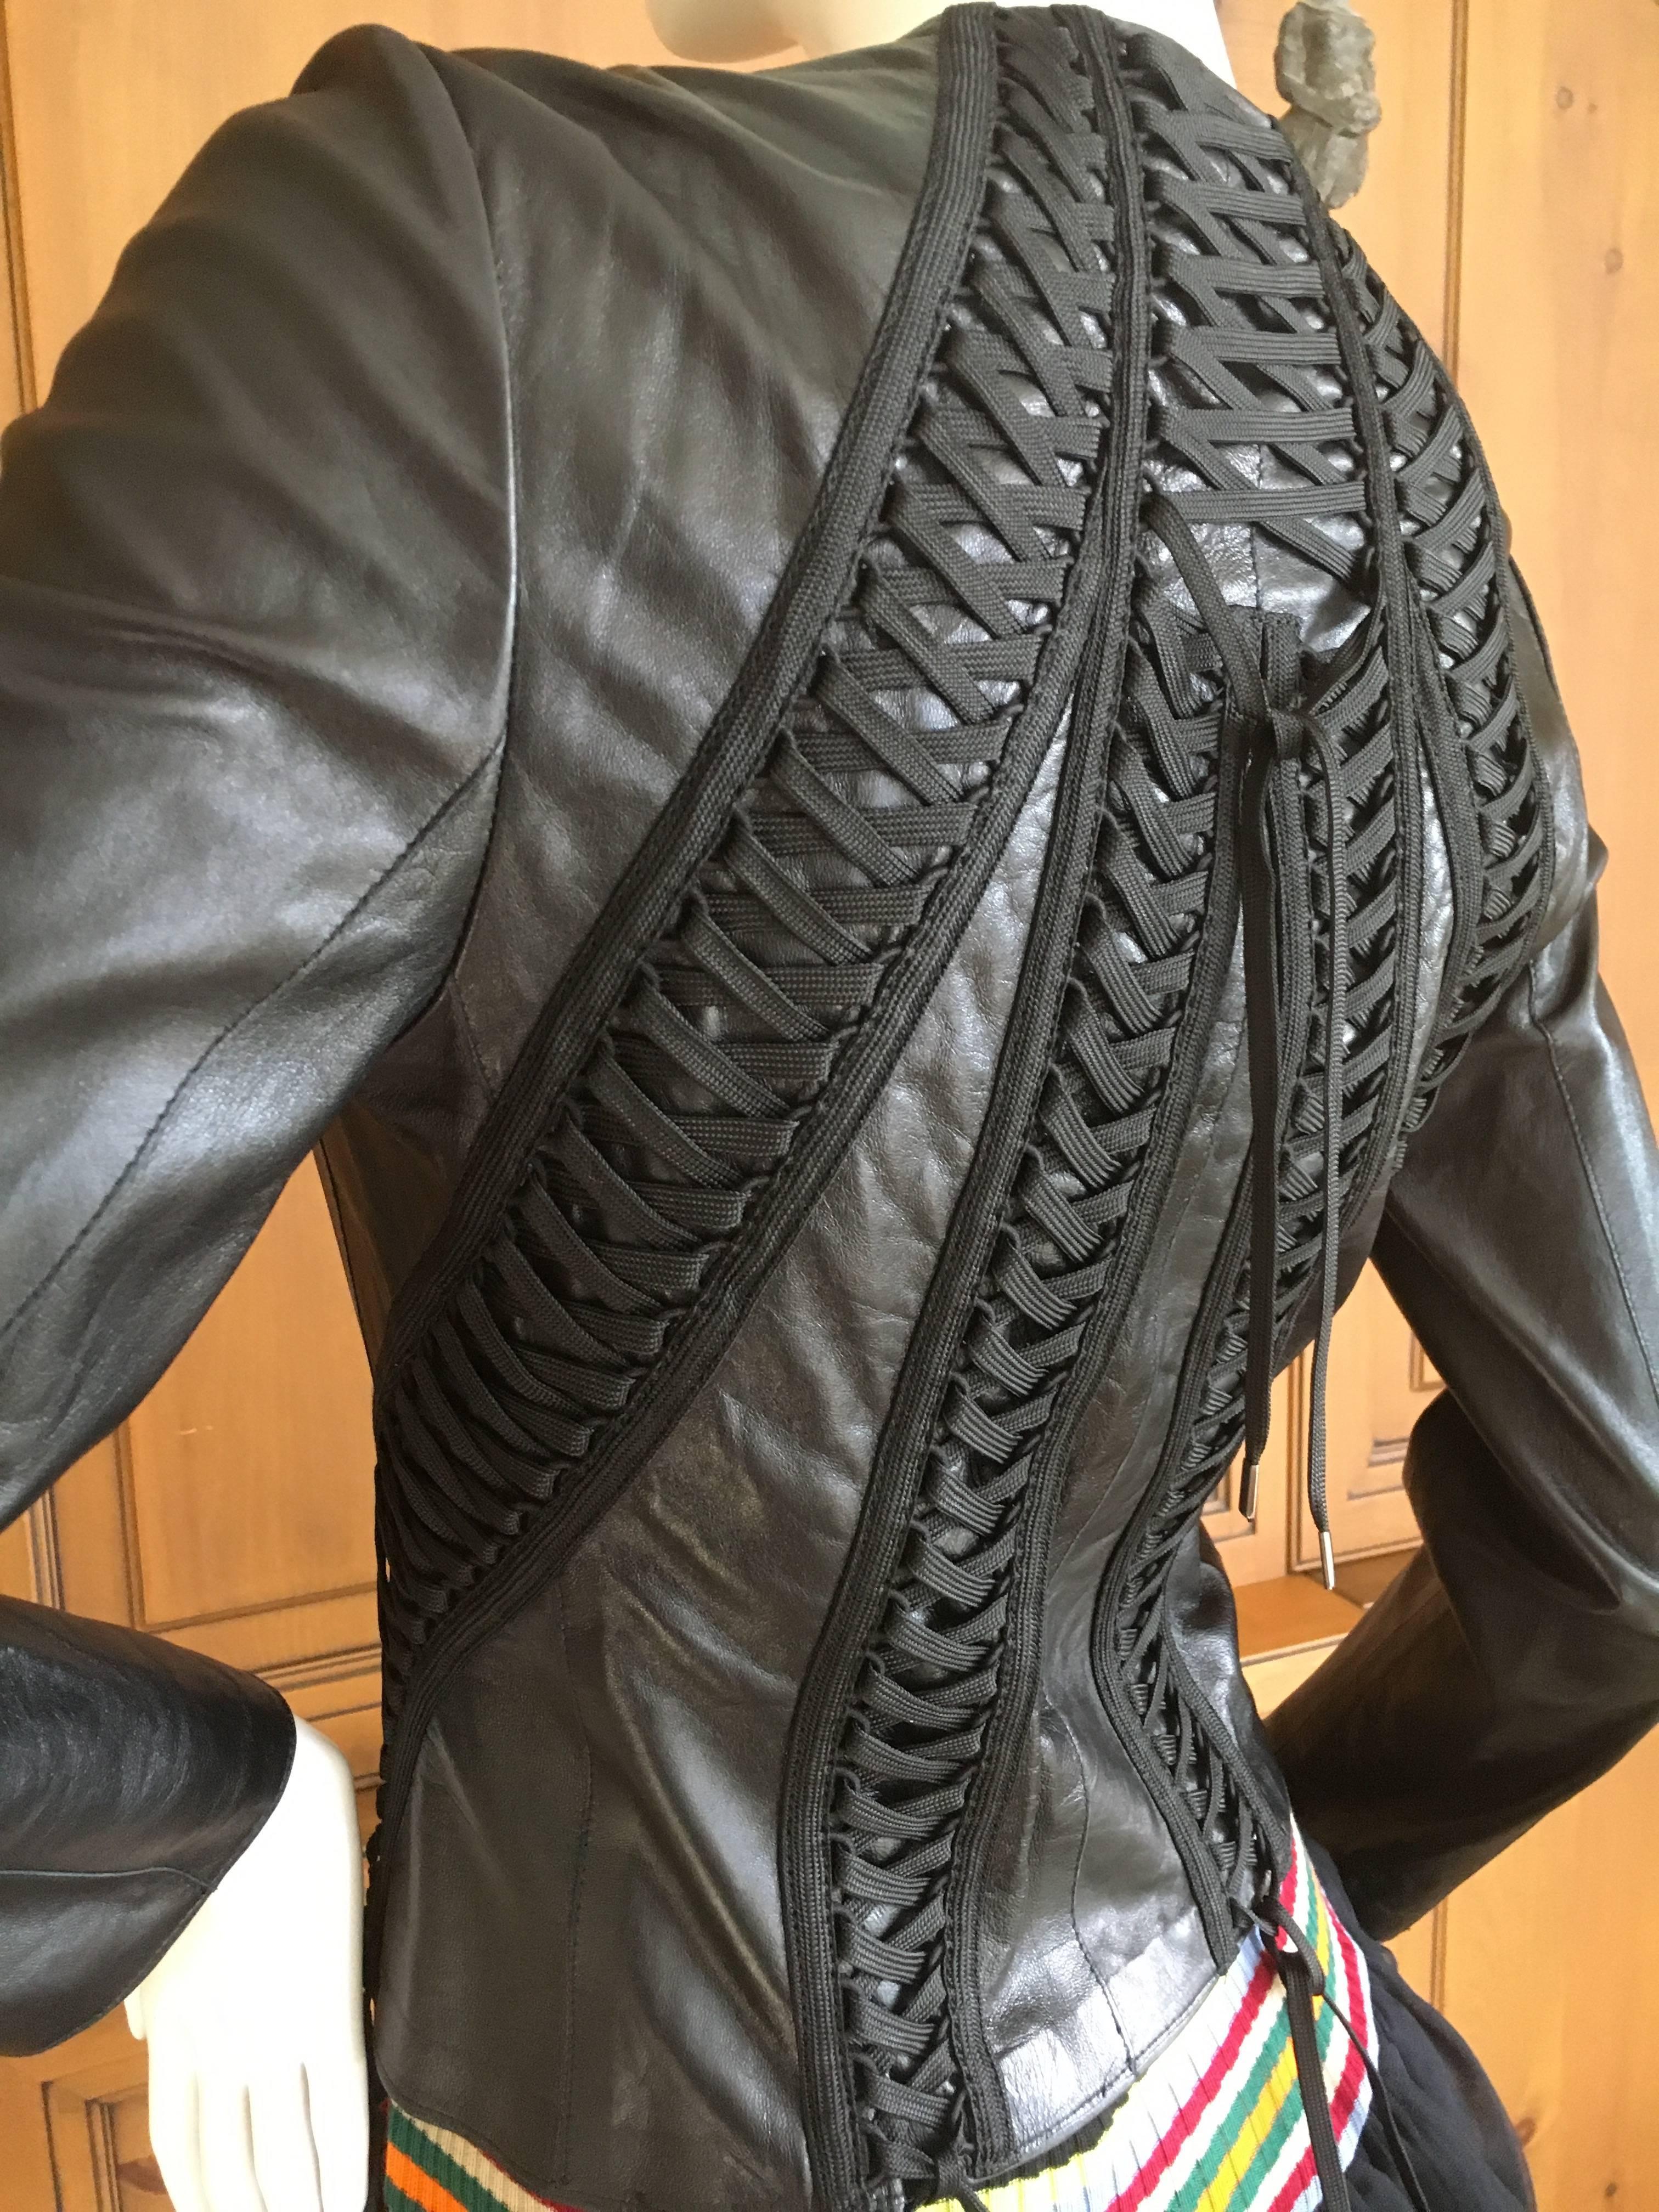 corset leather jacket